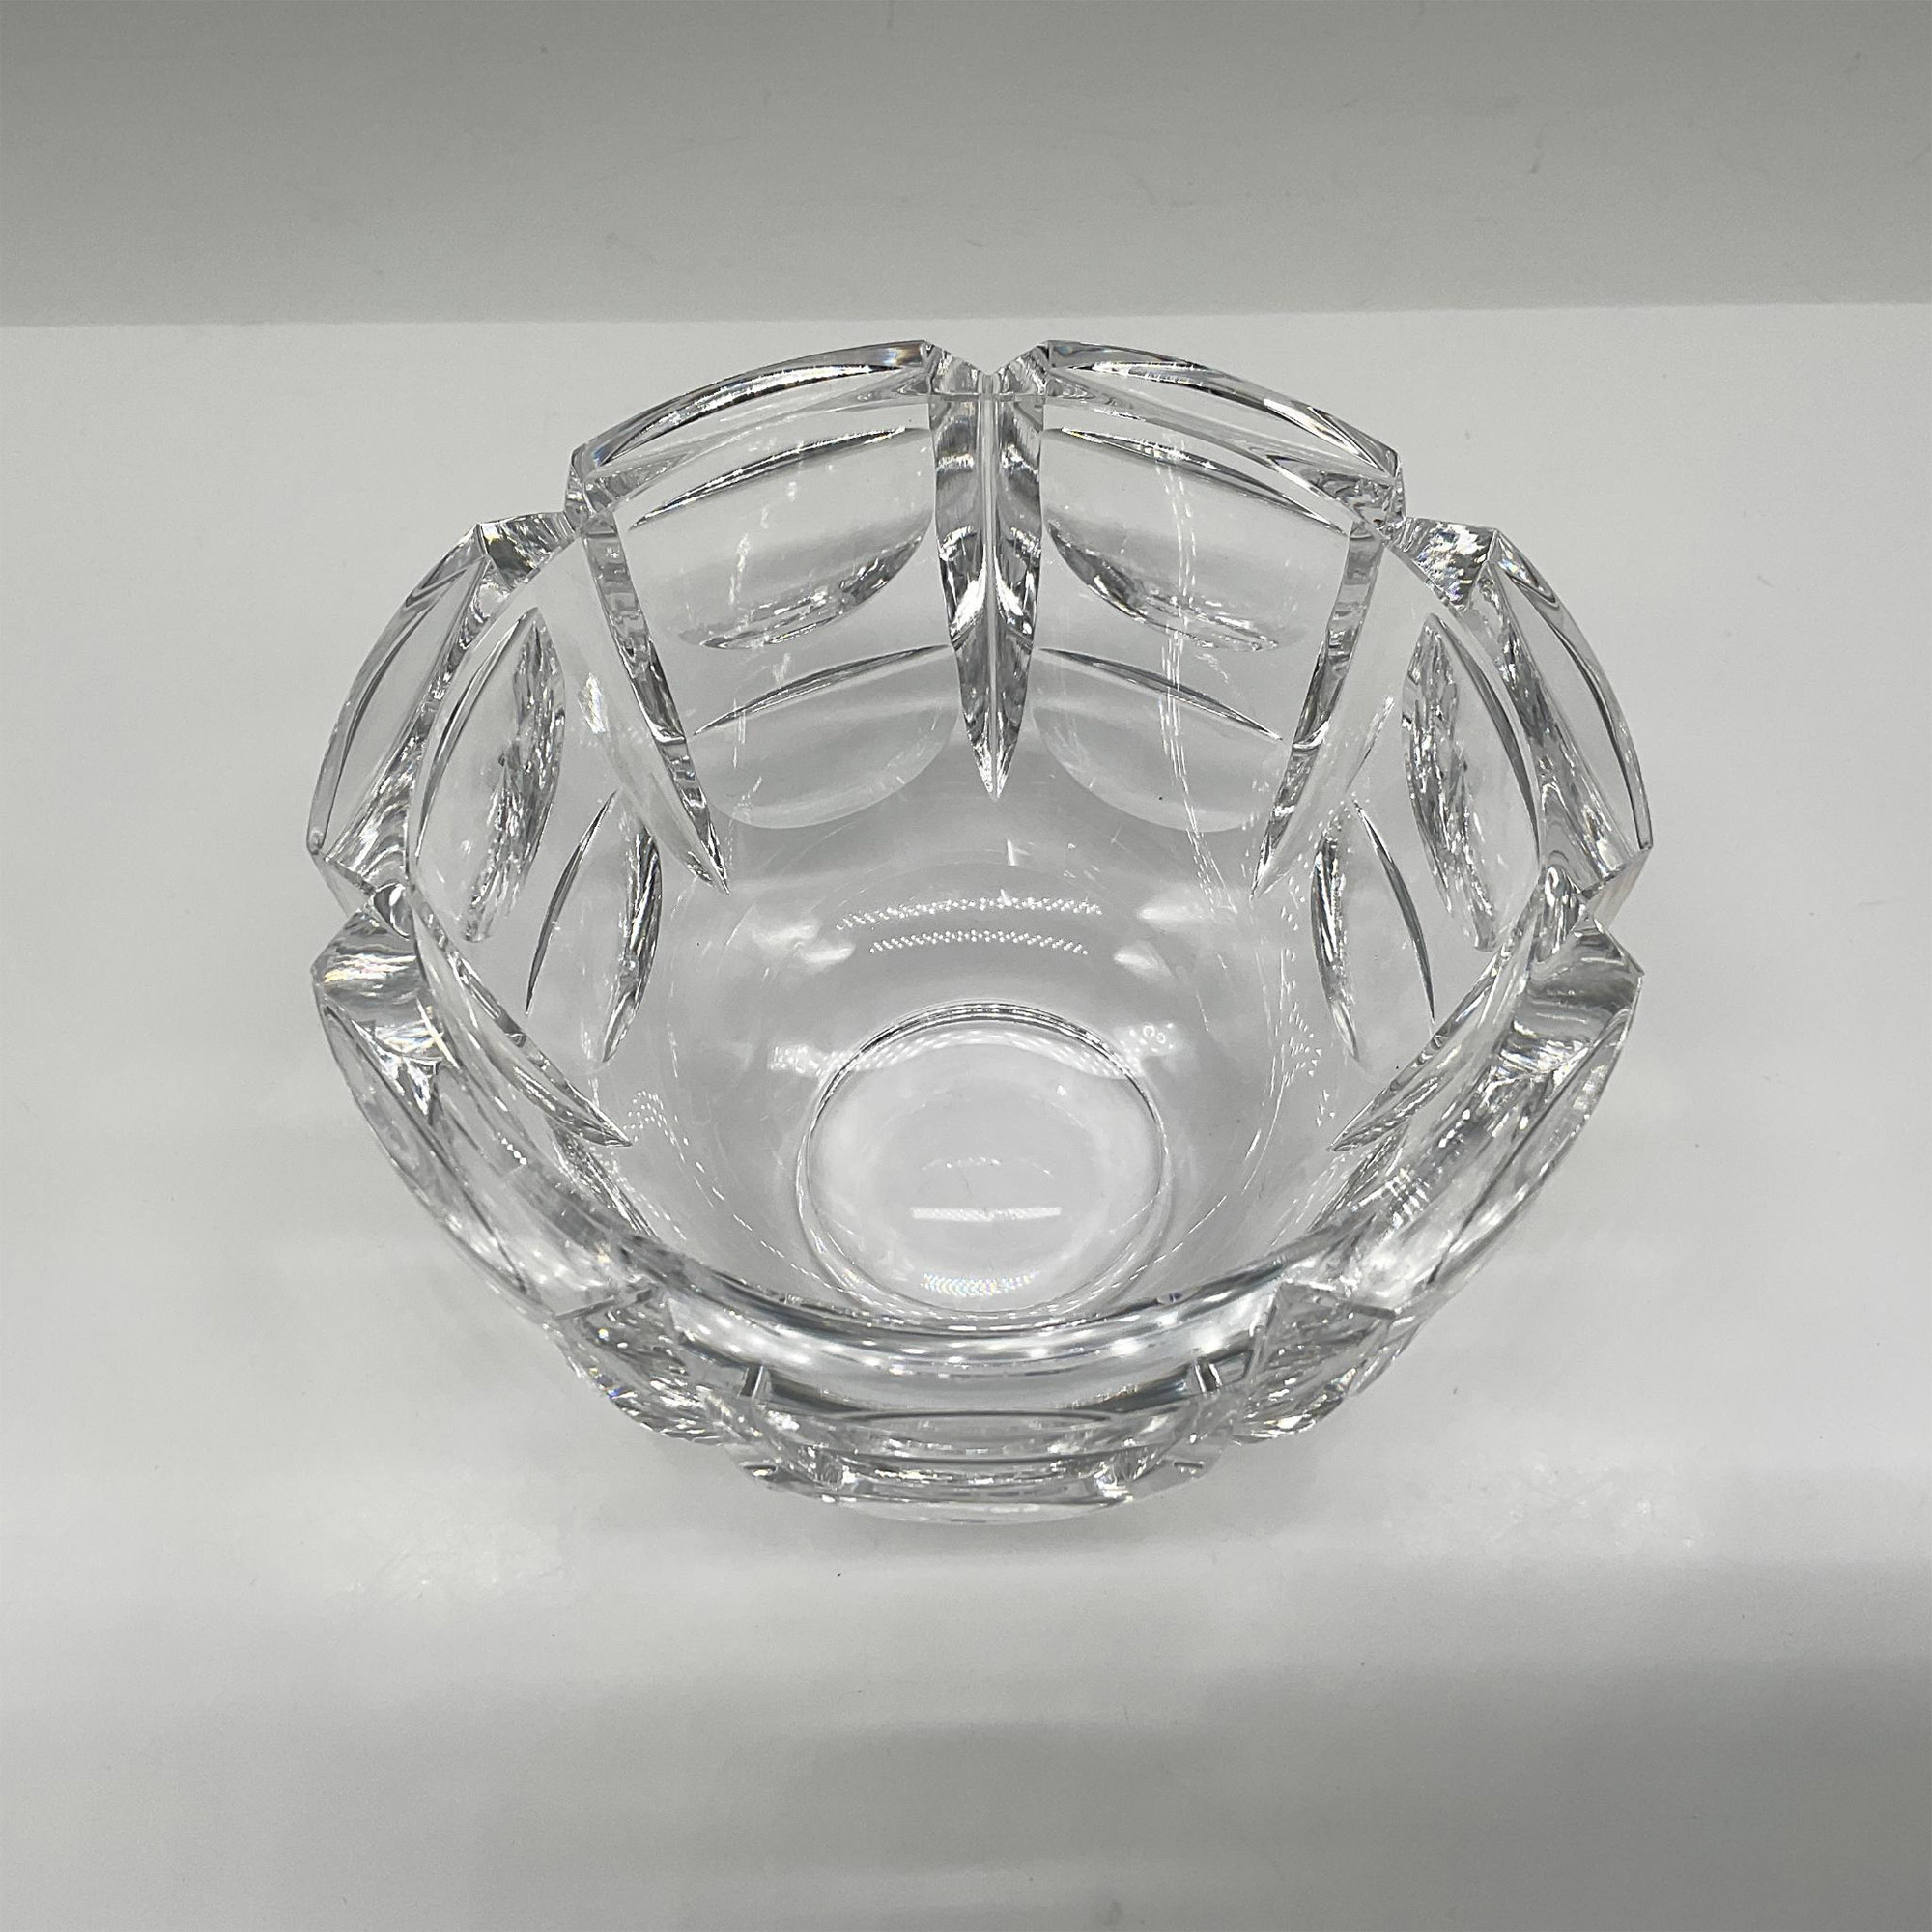 Kosta Boda Crystal Bowl - Image 2 of 3